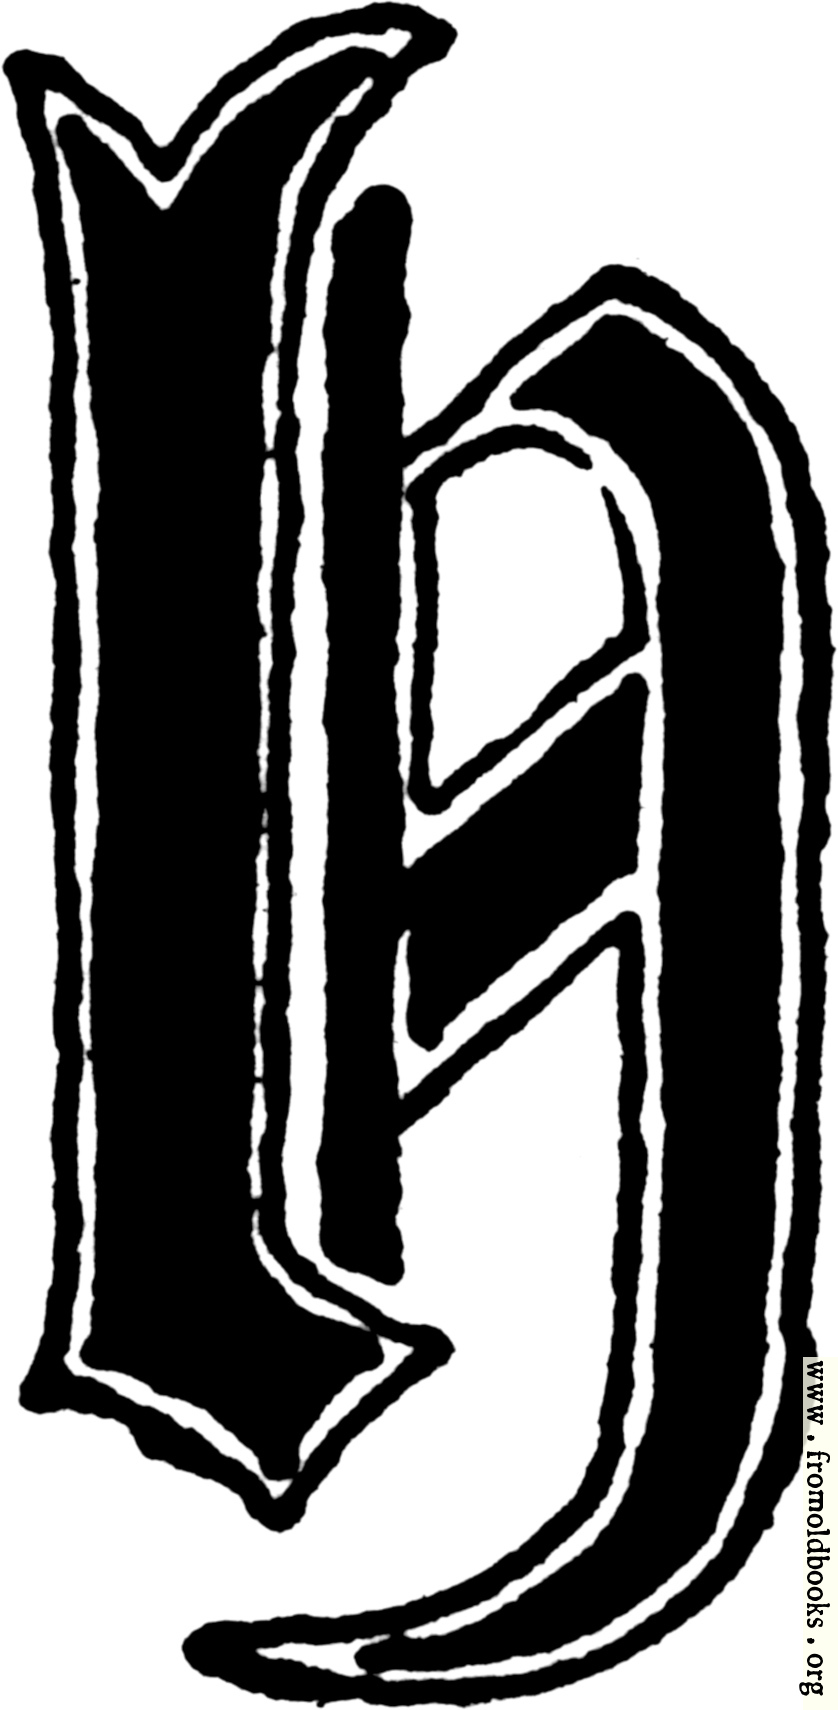 Calligraphic letter 